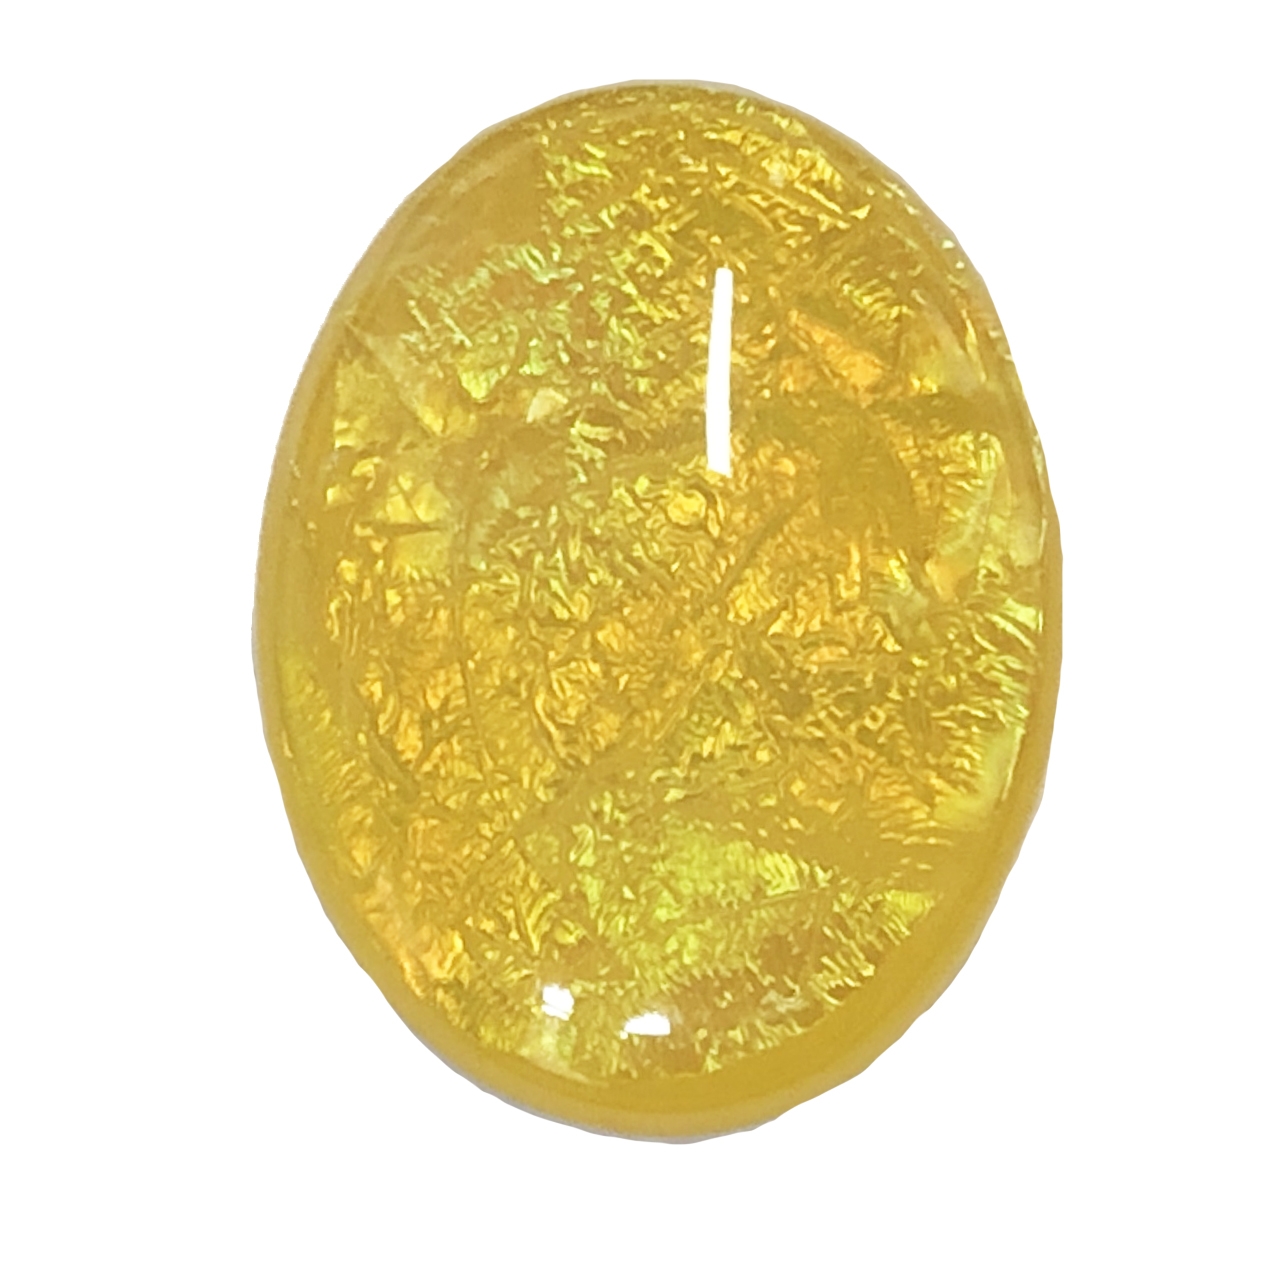 SALE* 11mm 4pcs Golden Amber Topaz fire opal Czech glass flat back cabochon November birthstone color DIY Jewelry supplies